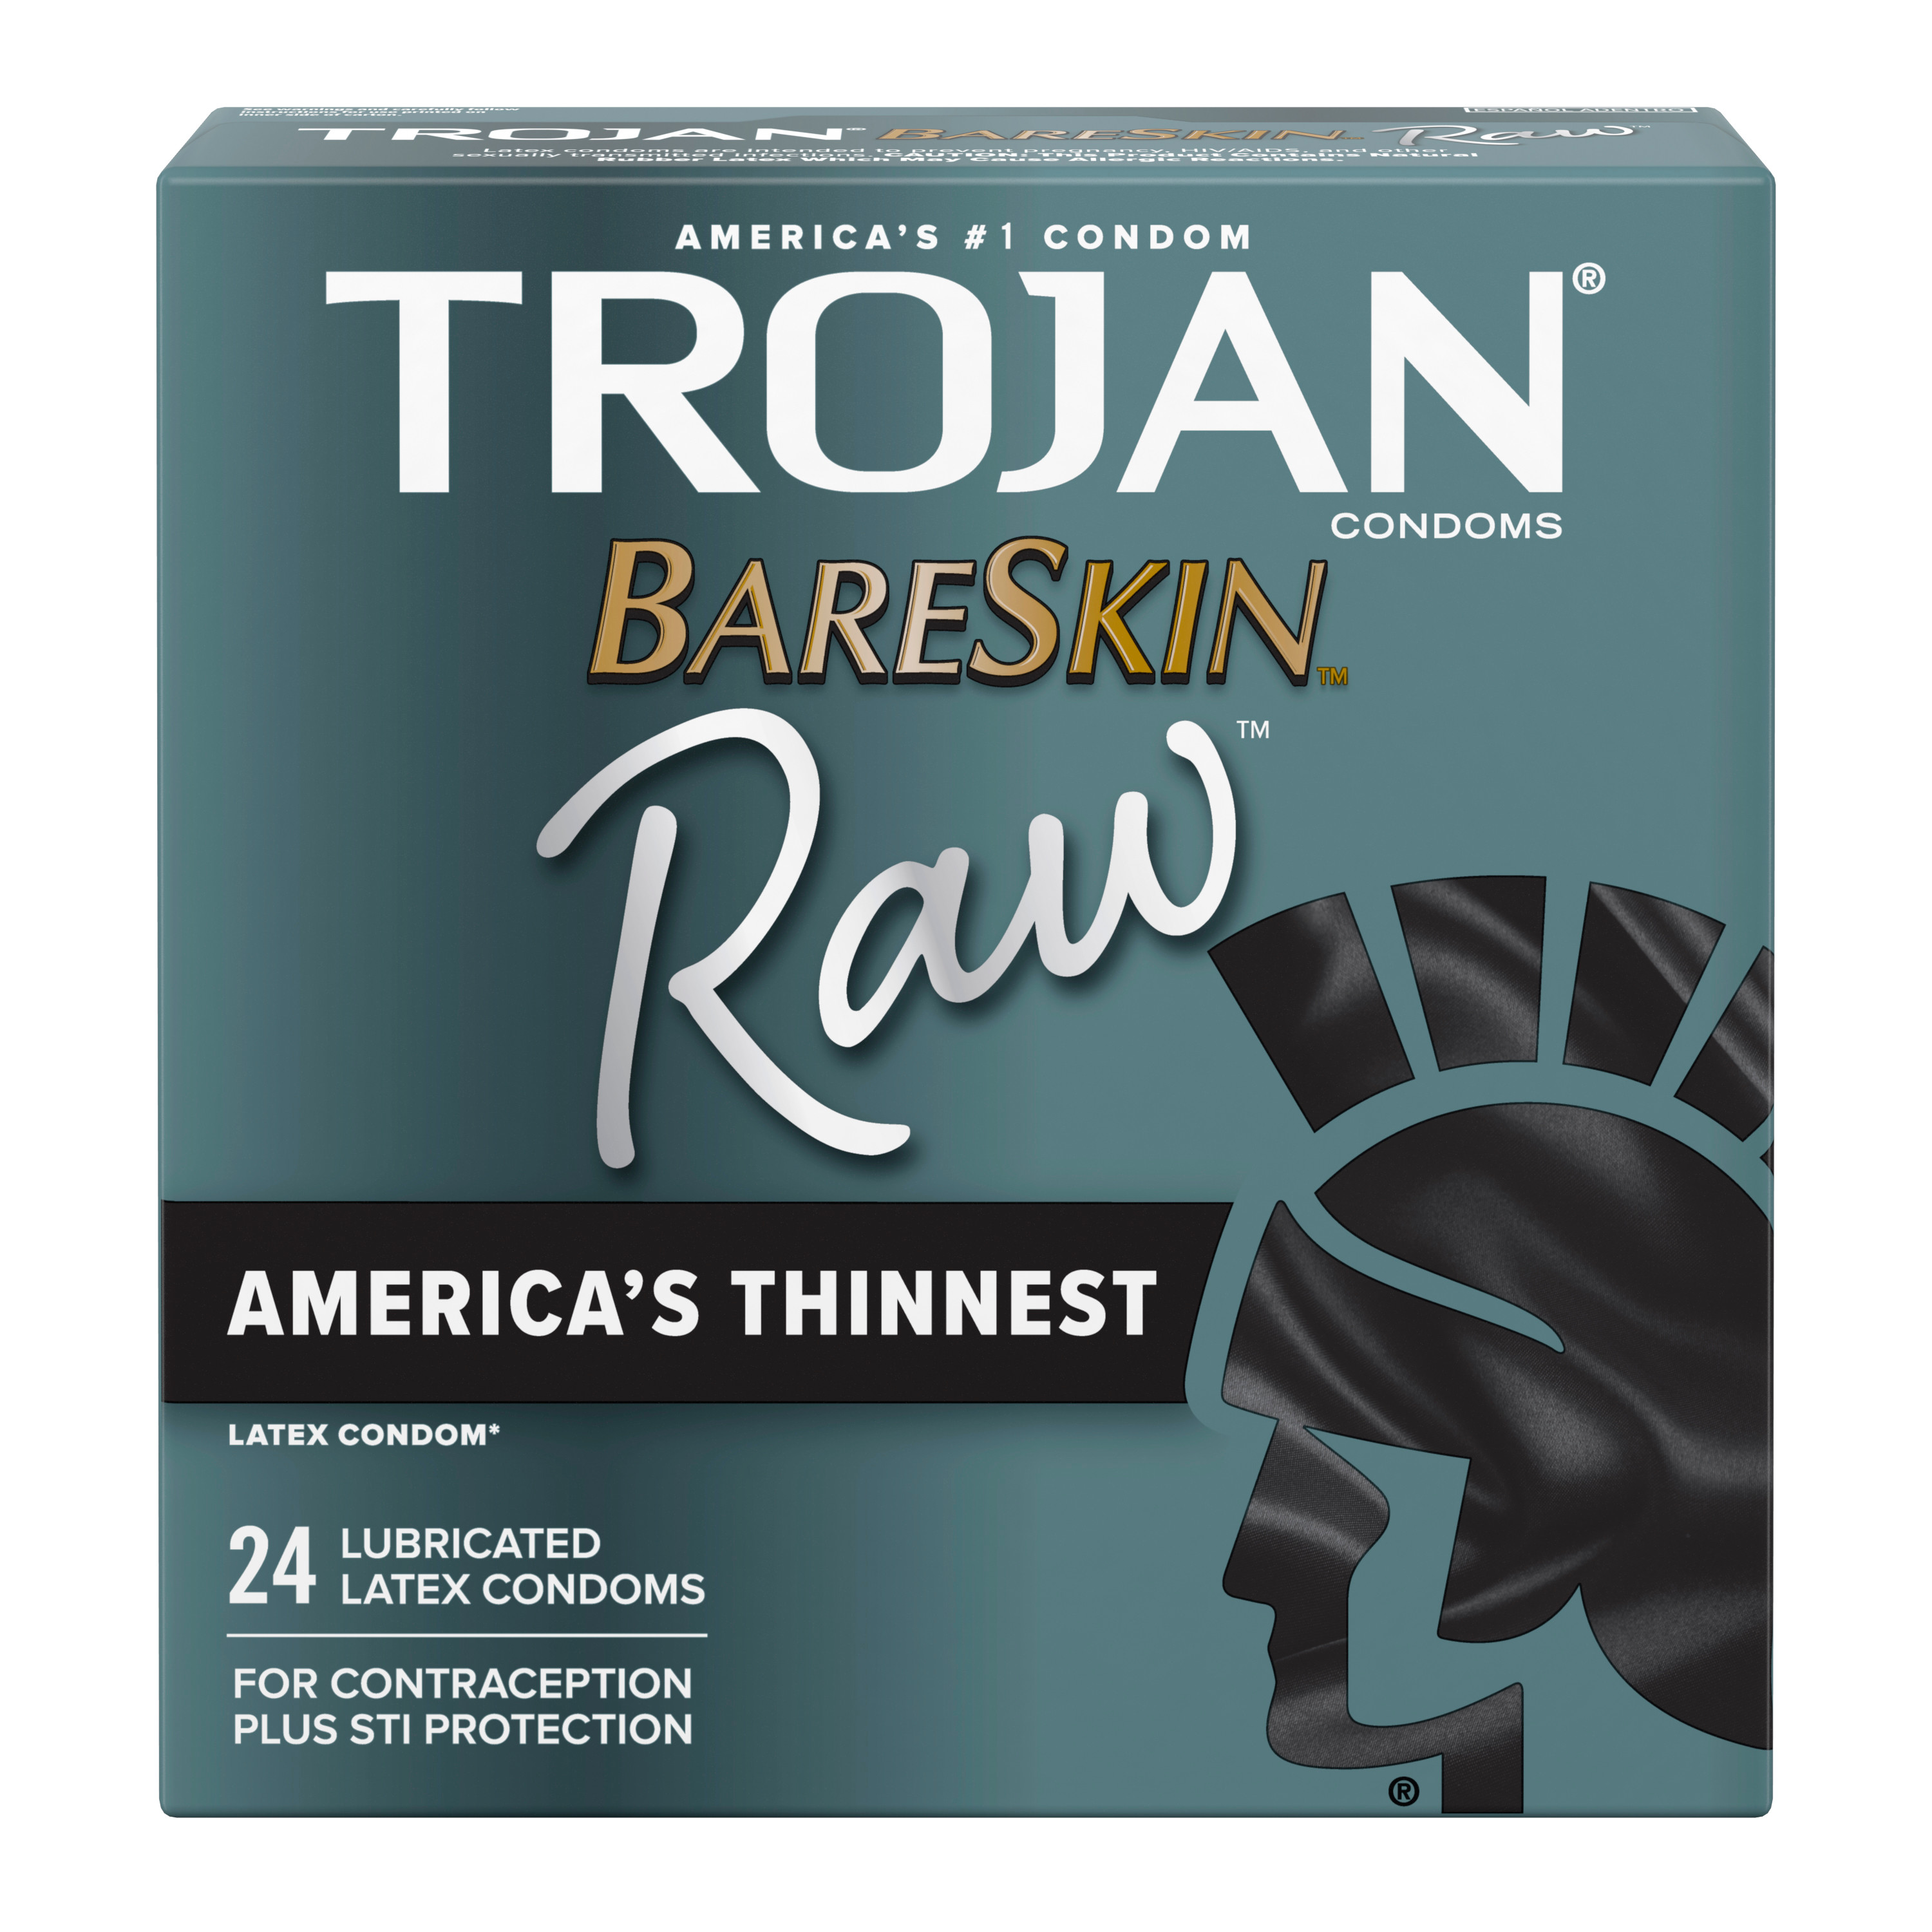 Trojan bareskin raw vs bareskin